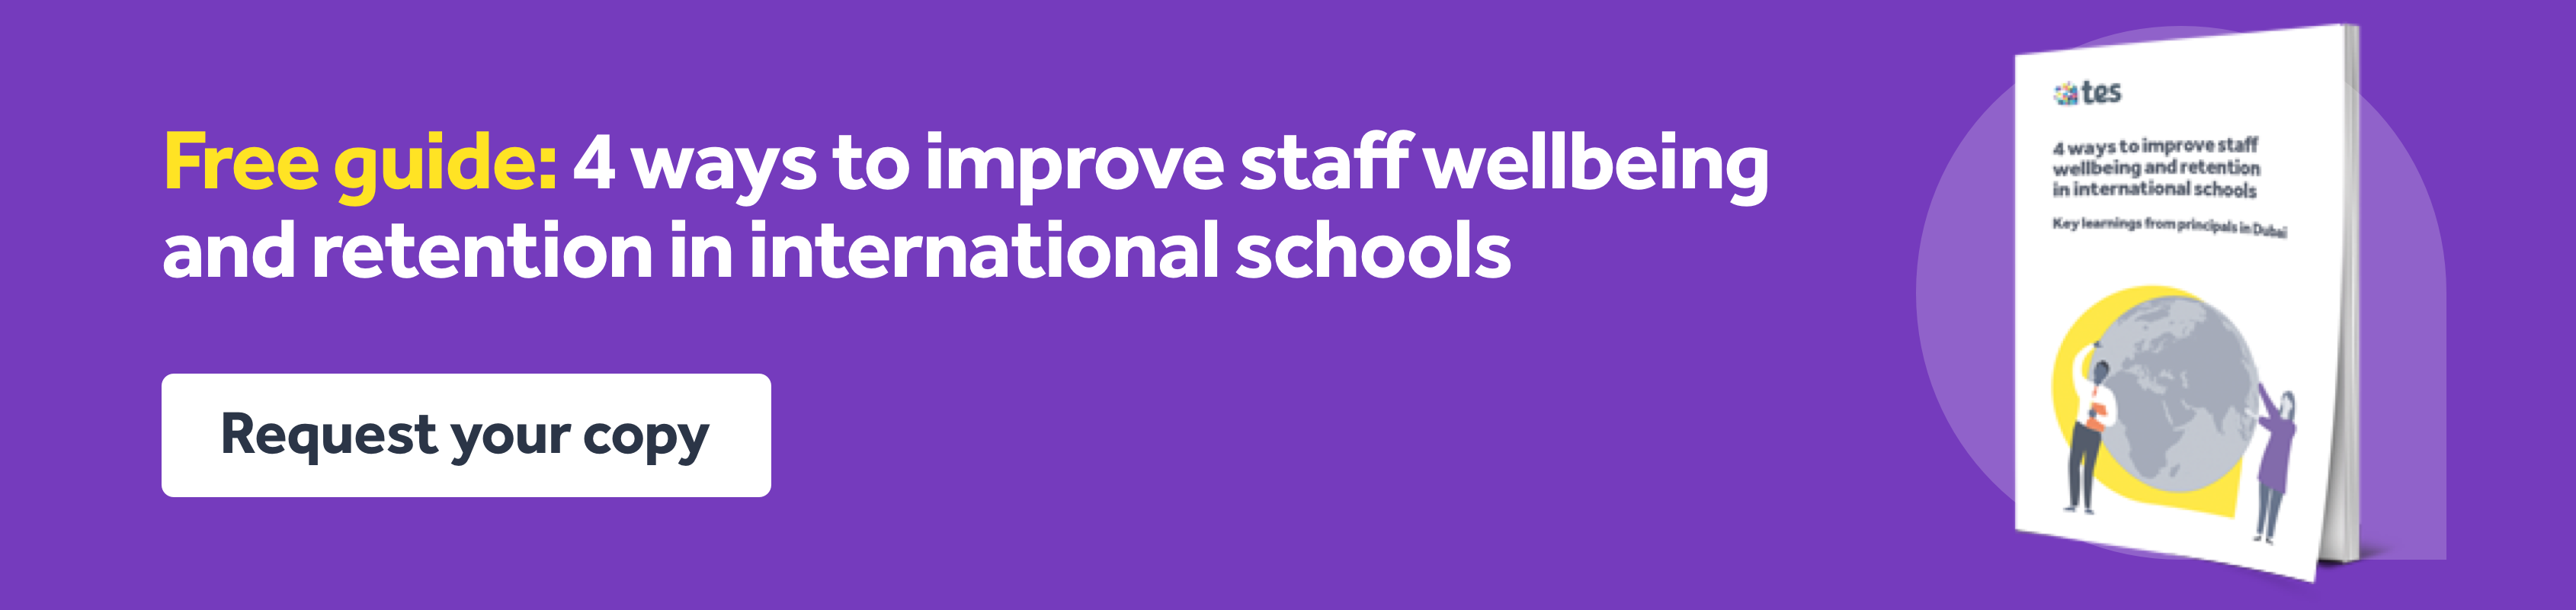 4 ways to improve staff wellbeing and retention in international schools